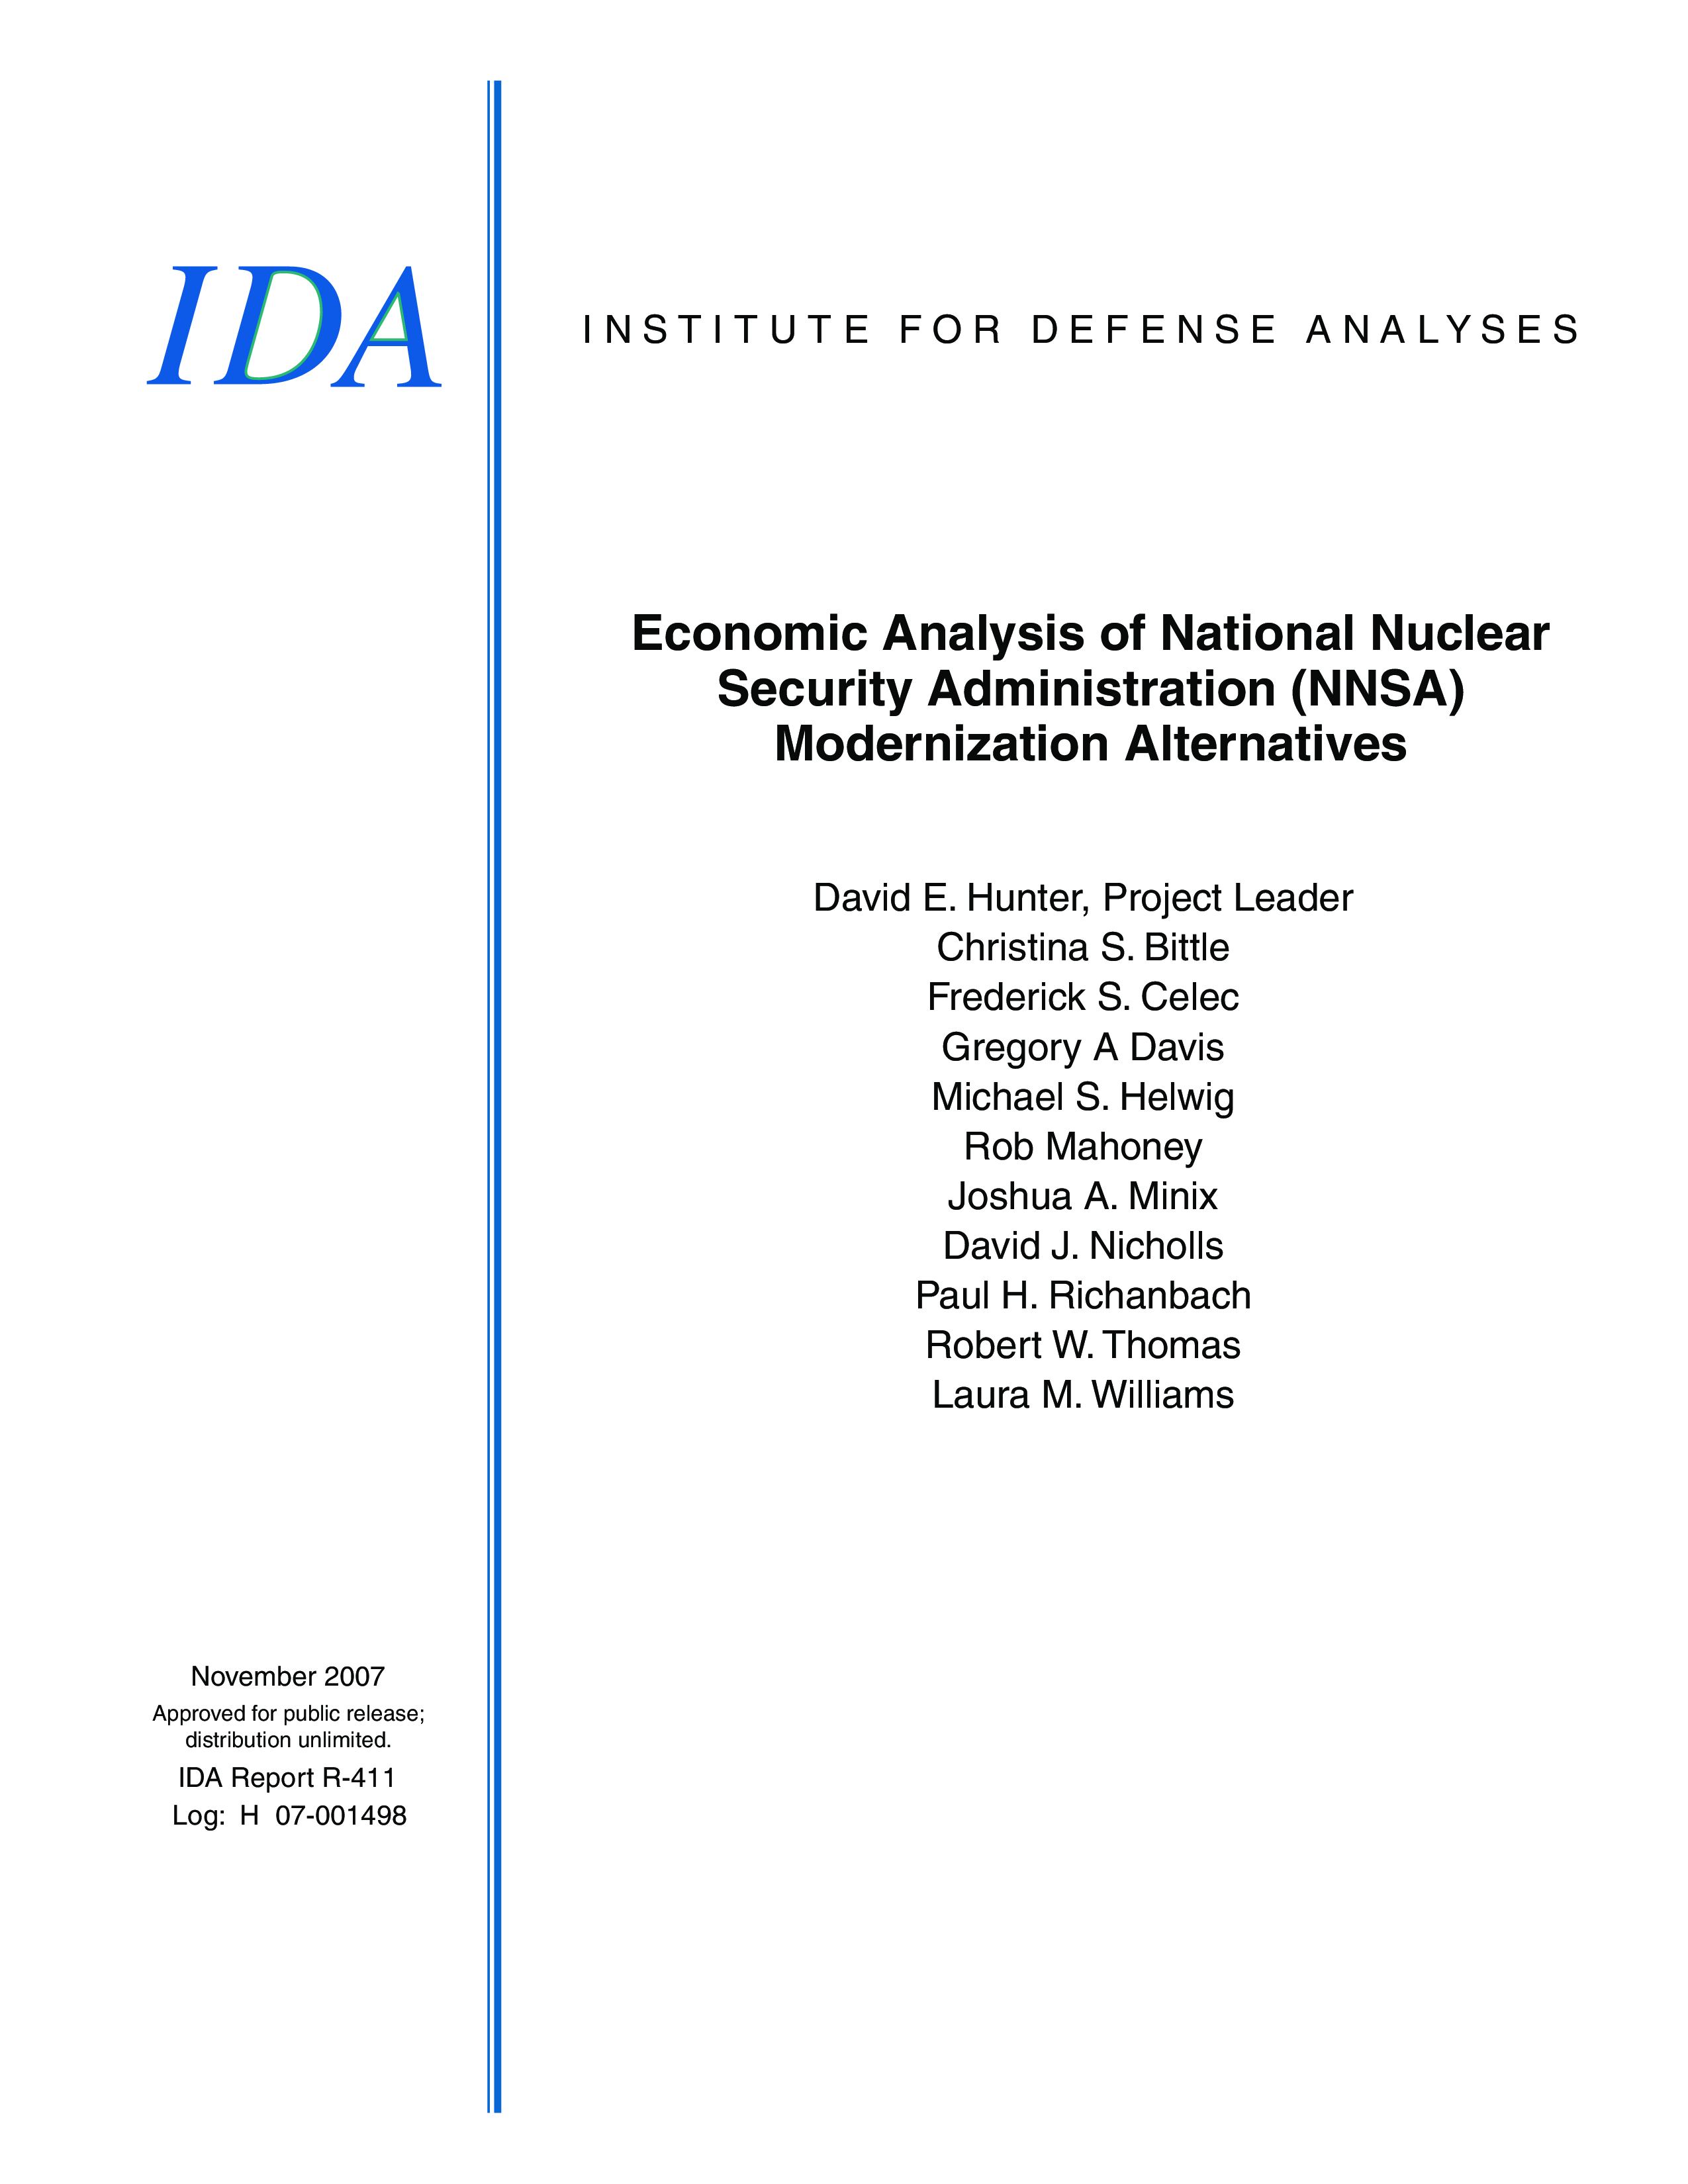 Economic Analysis of National Nuclear Security Administration (NNSA) Modernization Alternatives